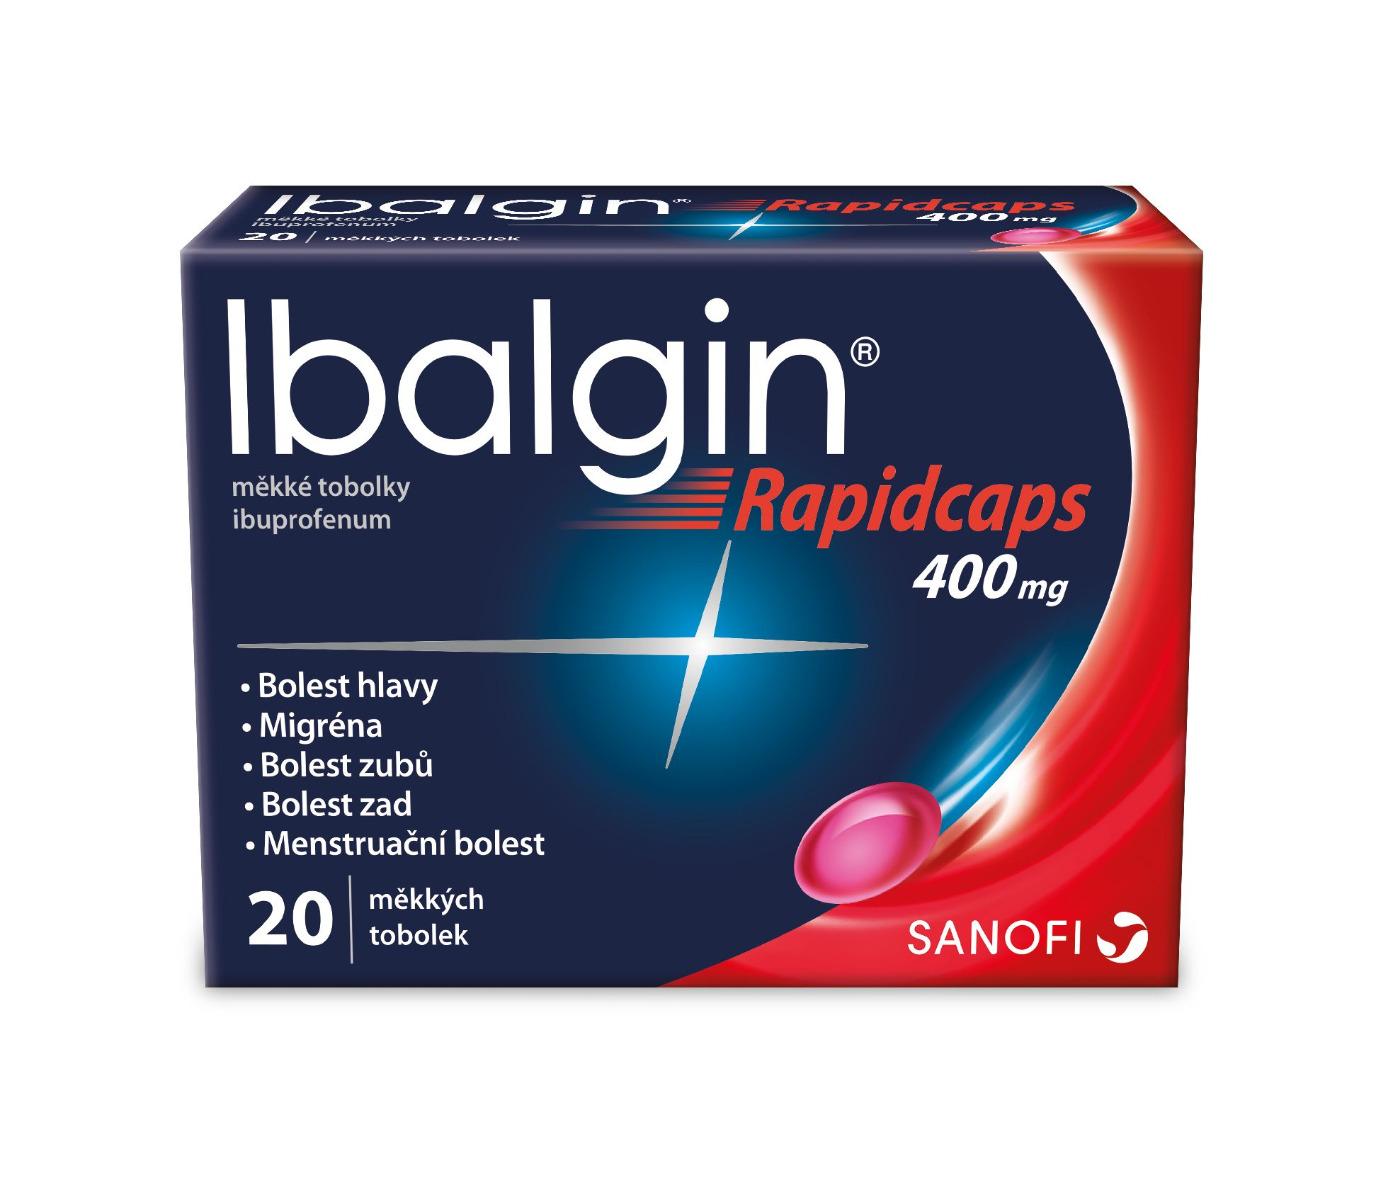 Ibalgin Rapidcaps 400 mg 20 měkkých tobolek Ibalgin